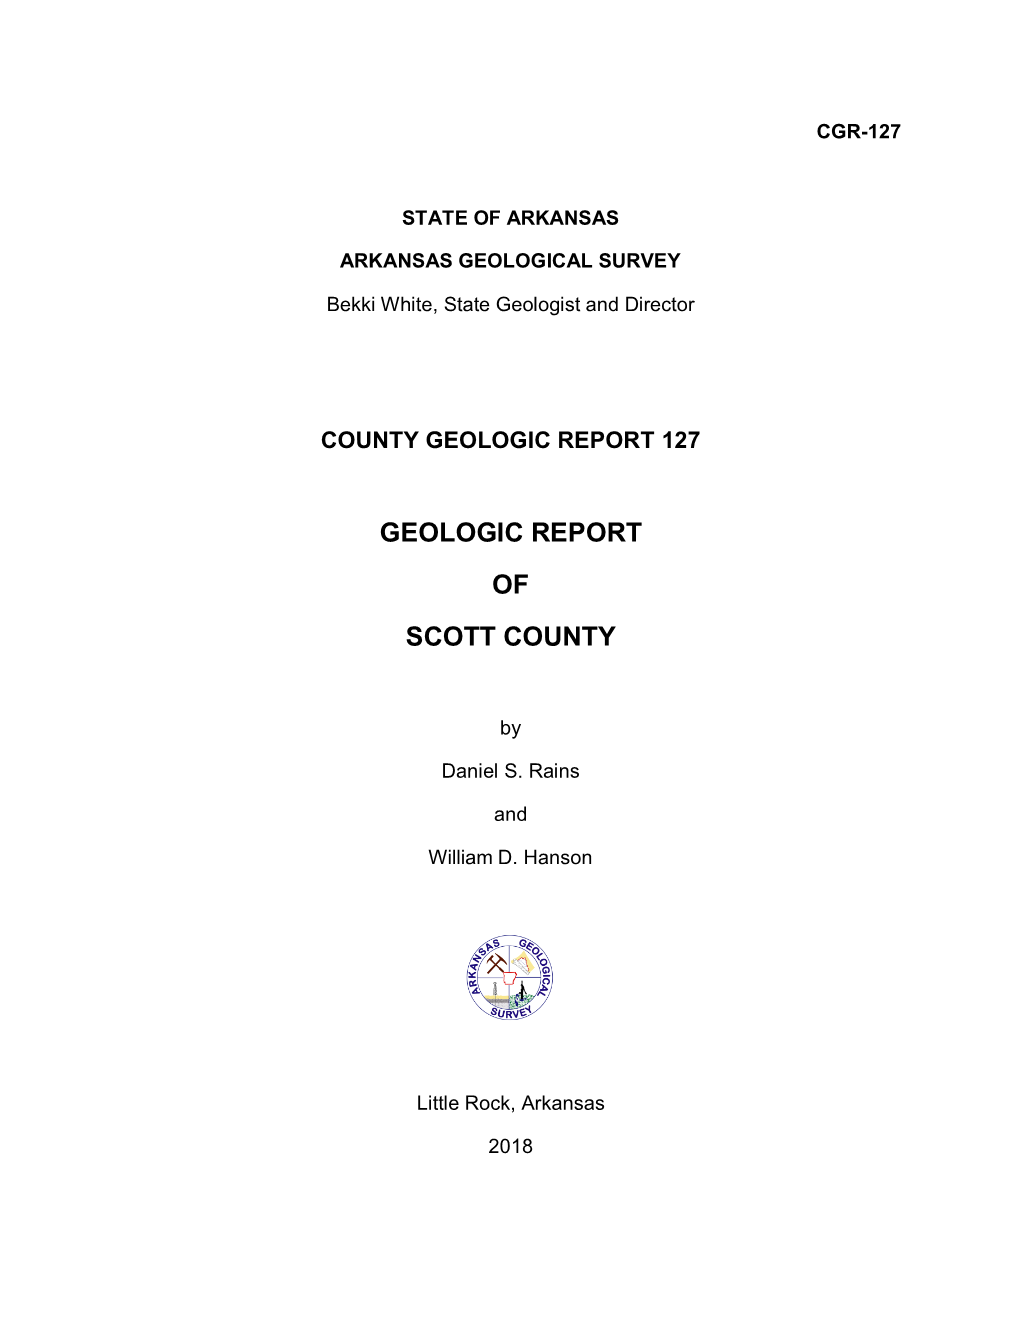 Geologic Report of Scott County